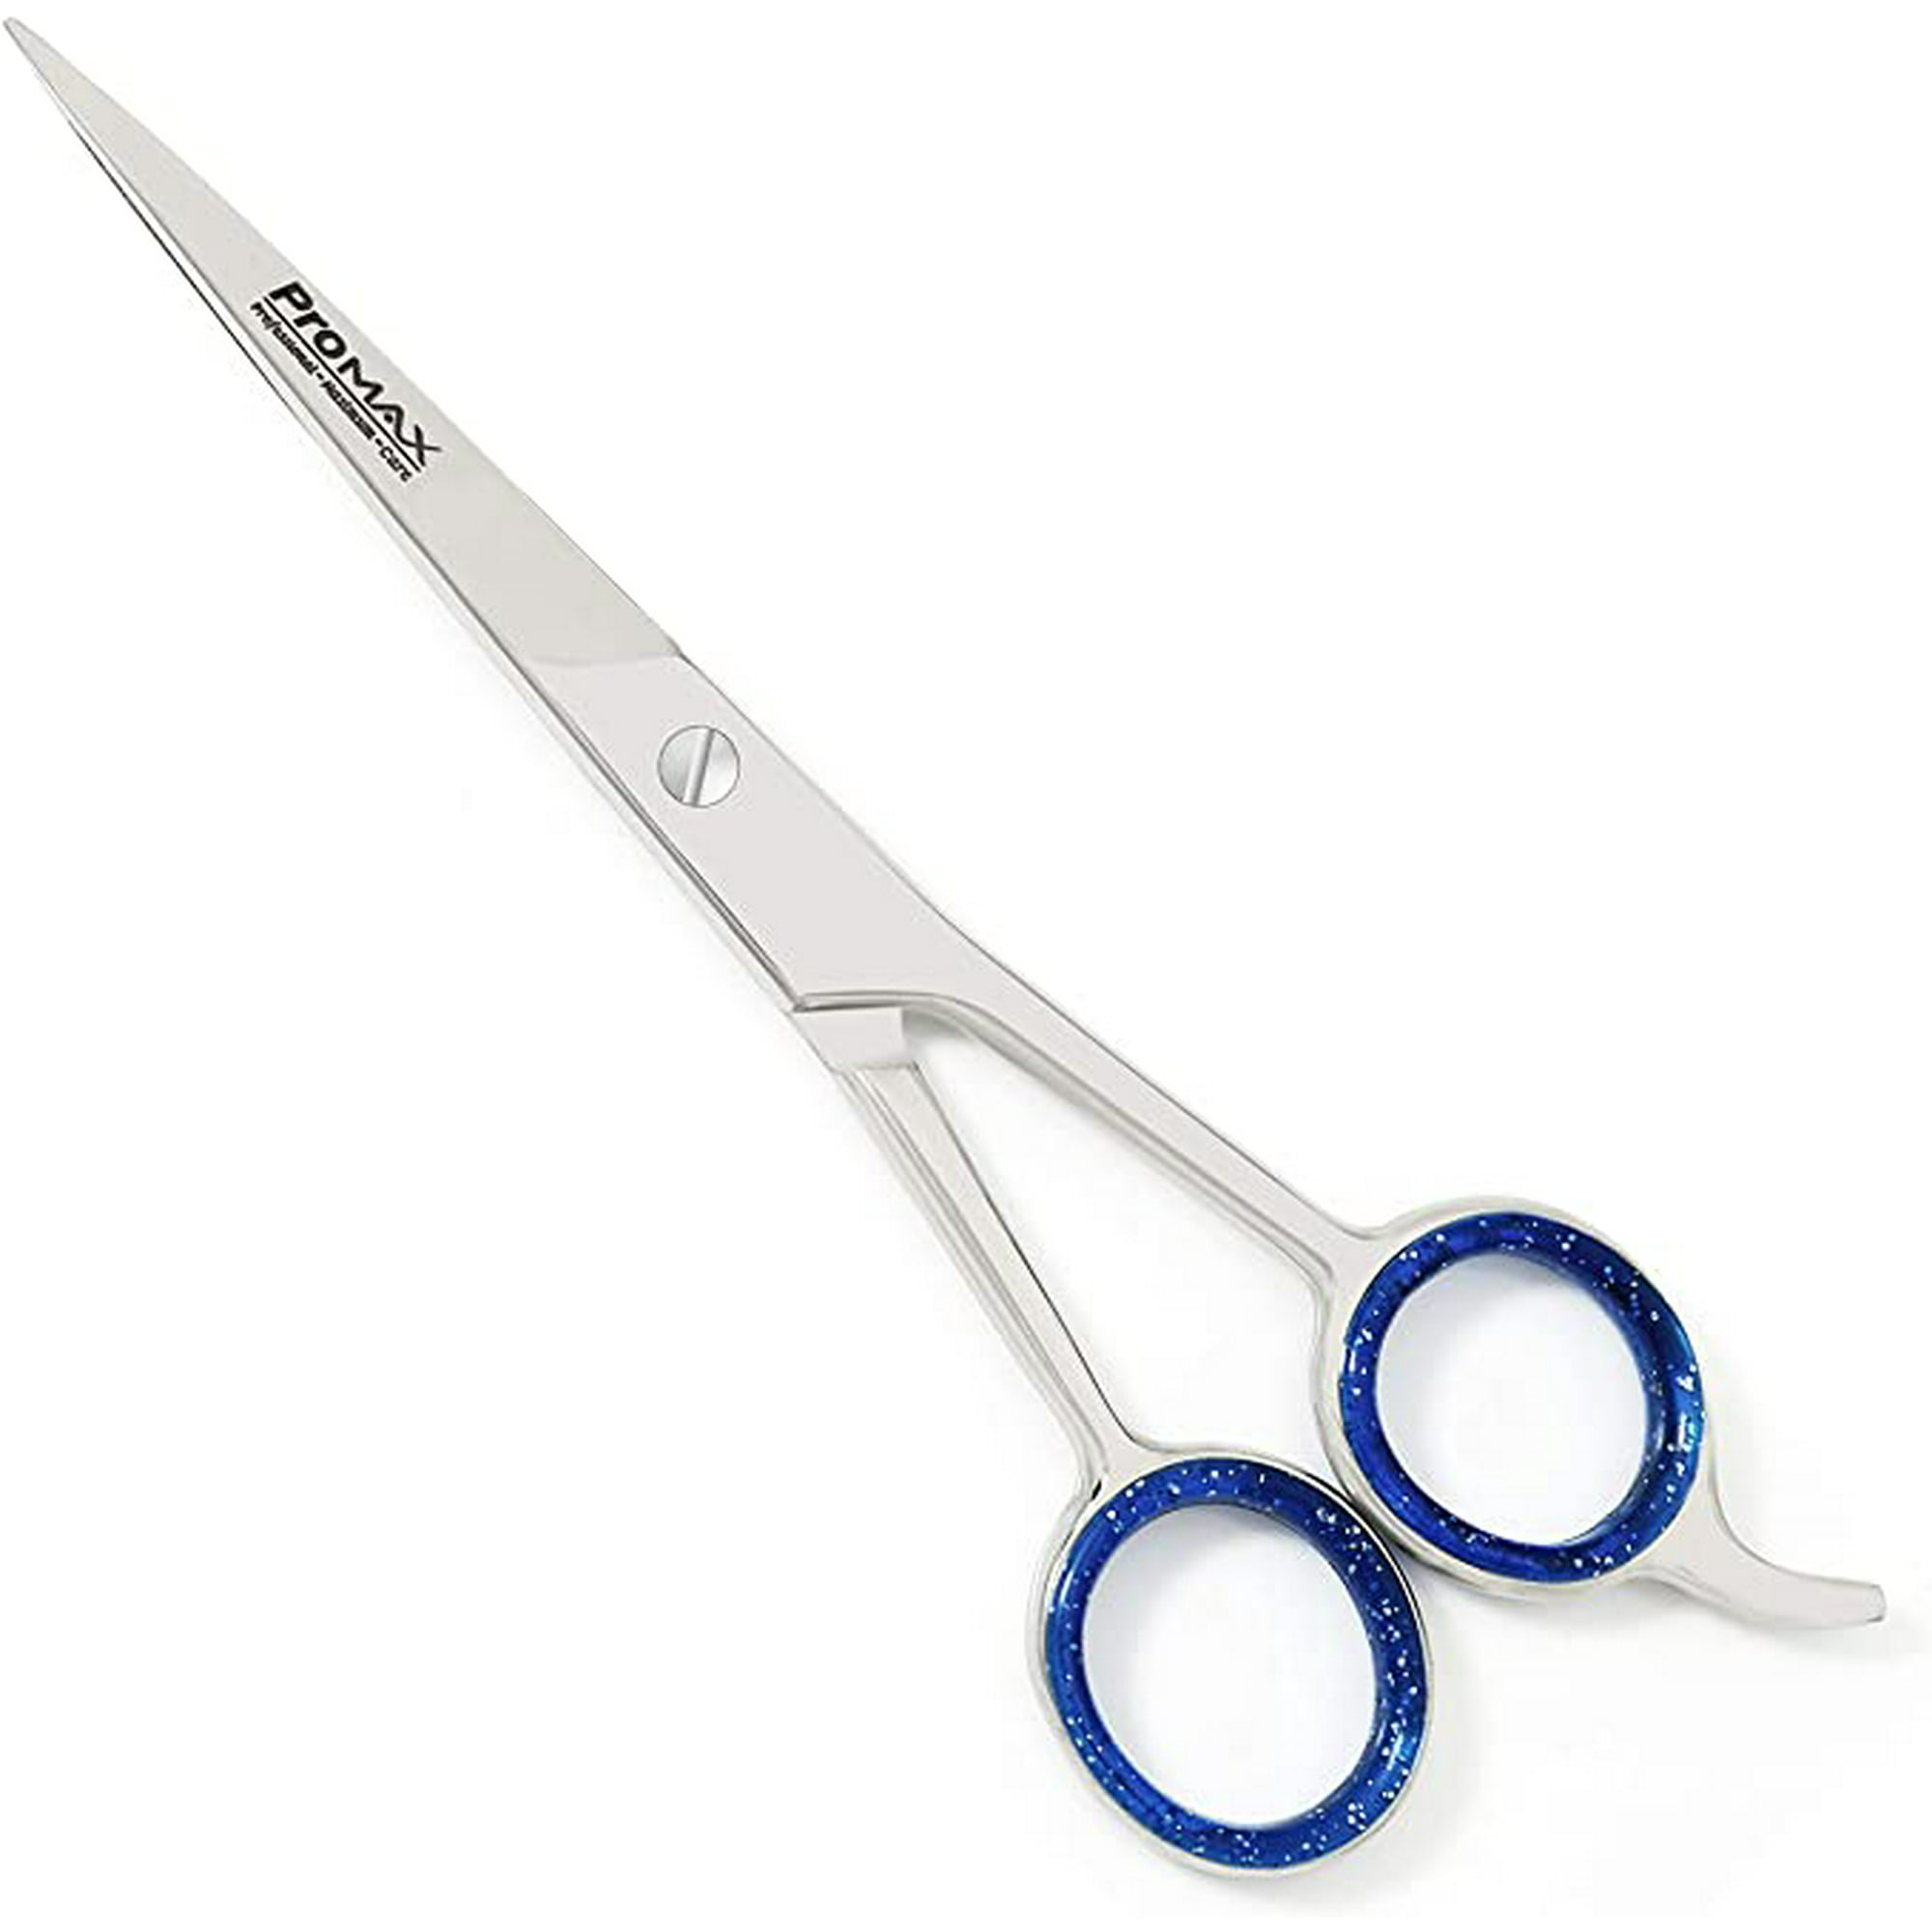 Professional Barber / Salon Razor Edge Hair Cutting Scissors/ Shears 